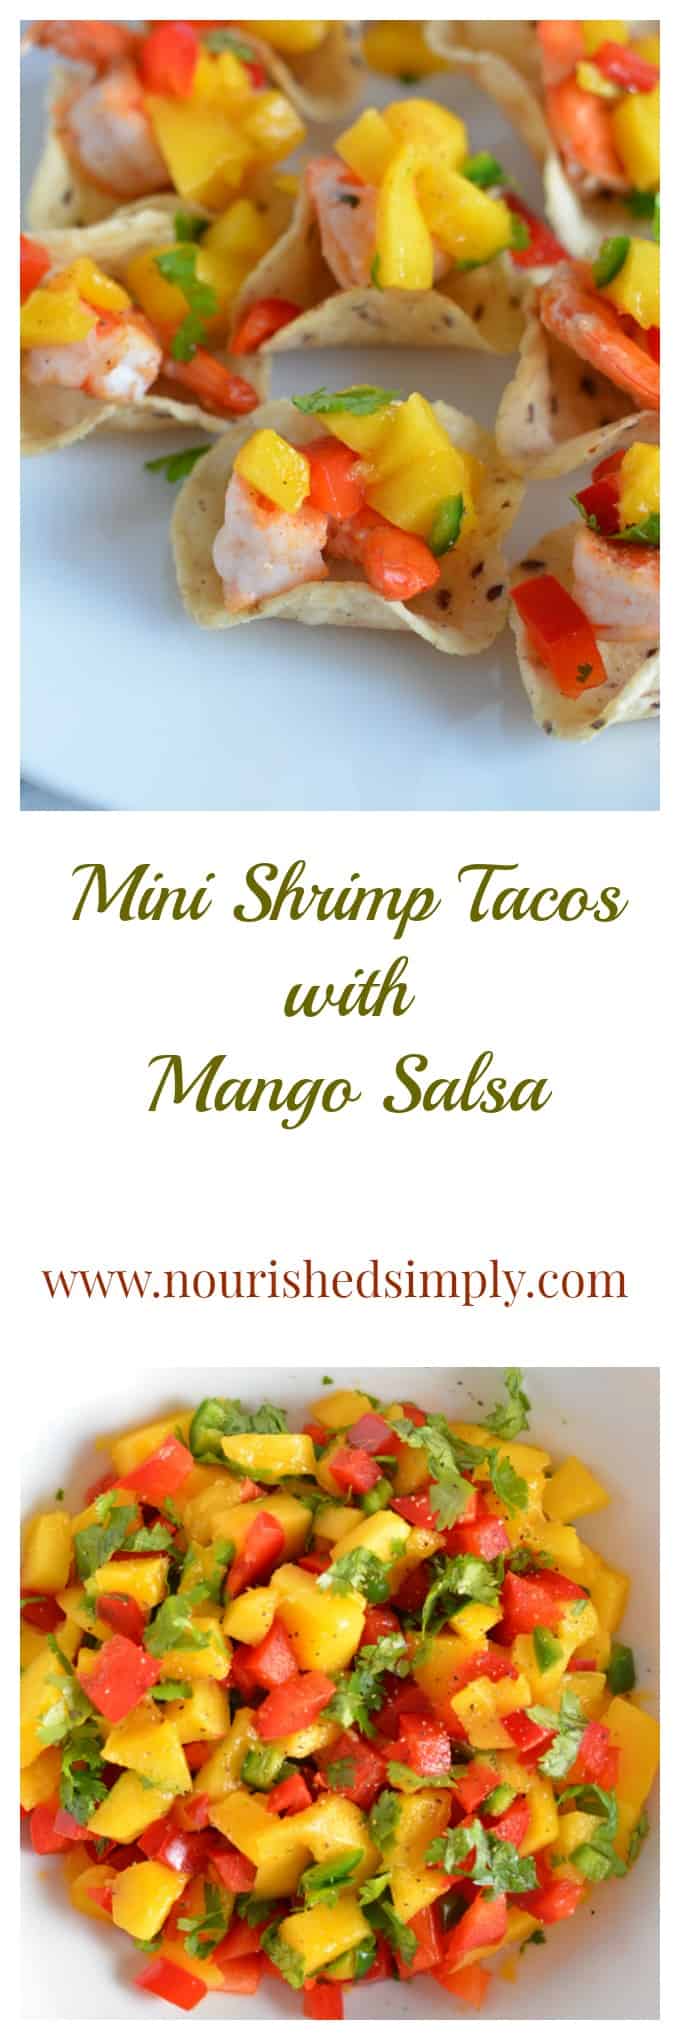 Mini Shrimp Tacos with Mango Salsa